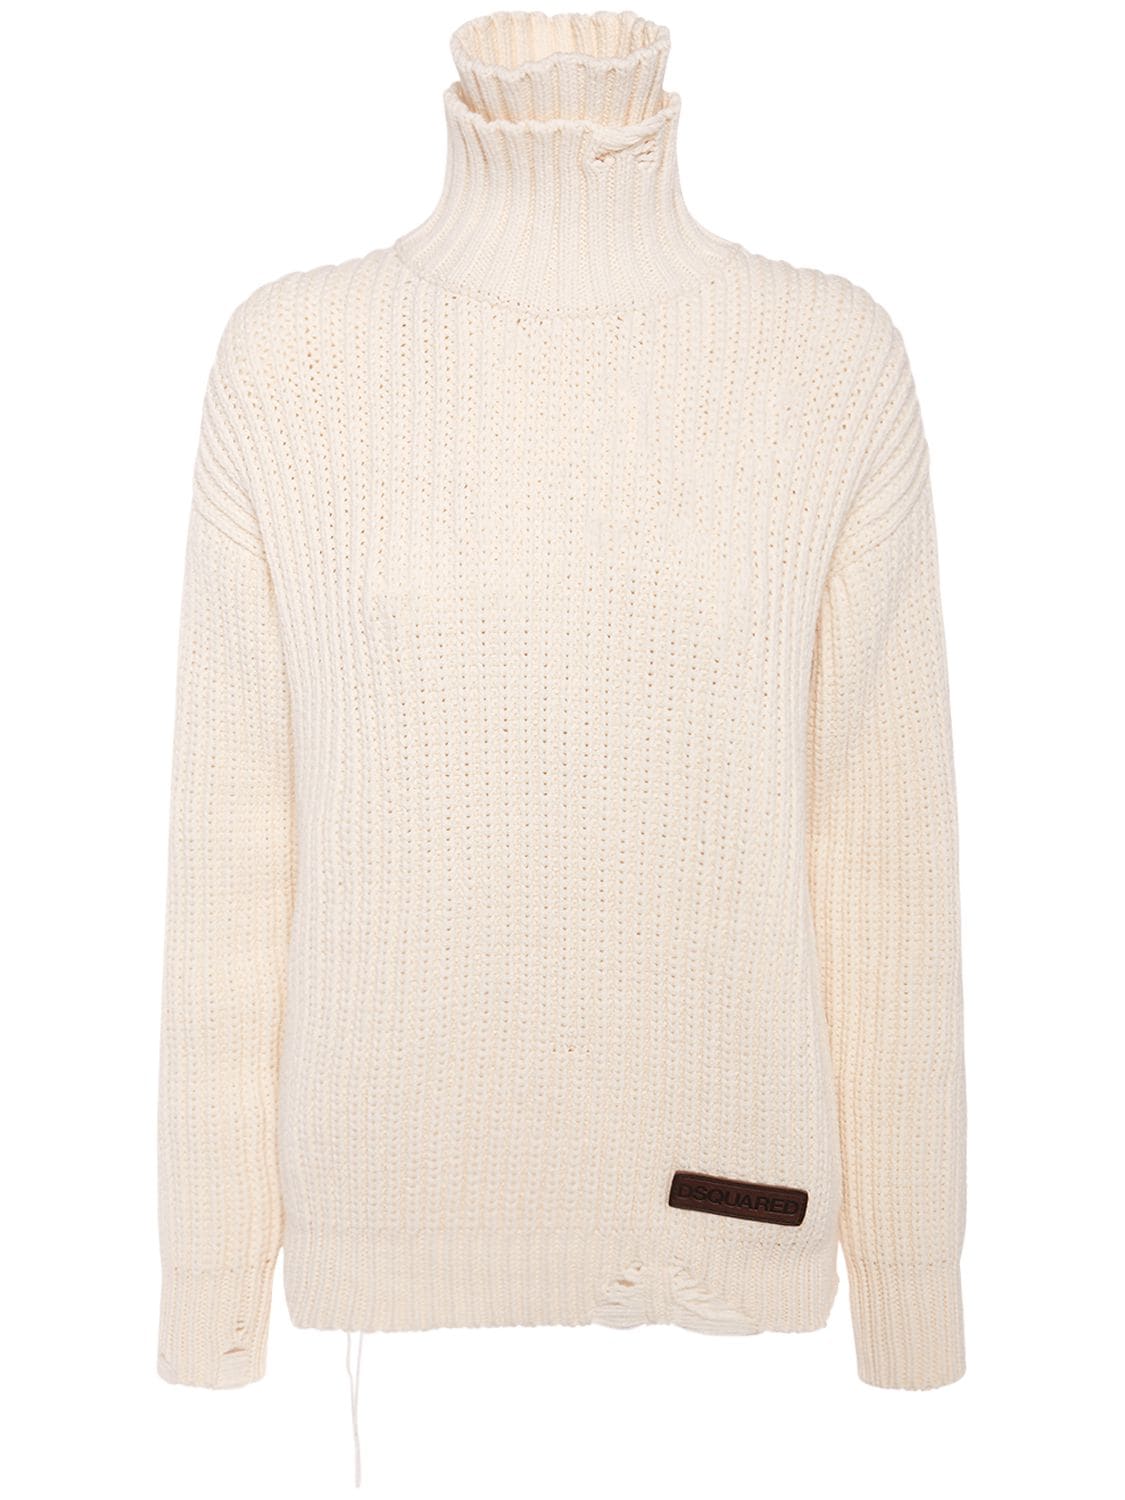 Image of Cotton Blend Rib Knit Turtleneck Sweater